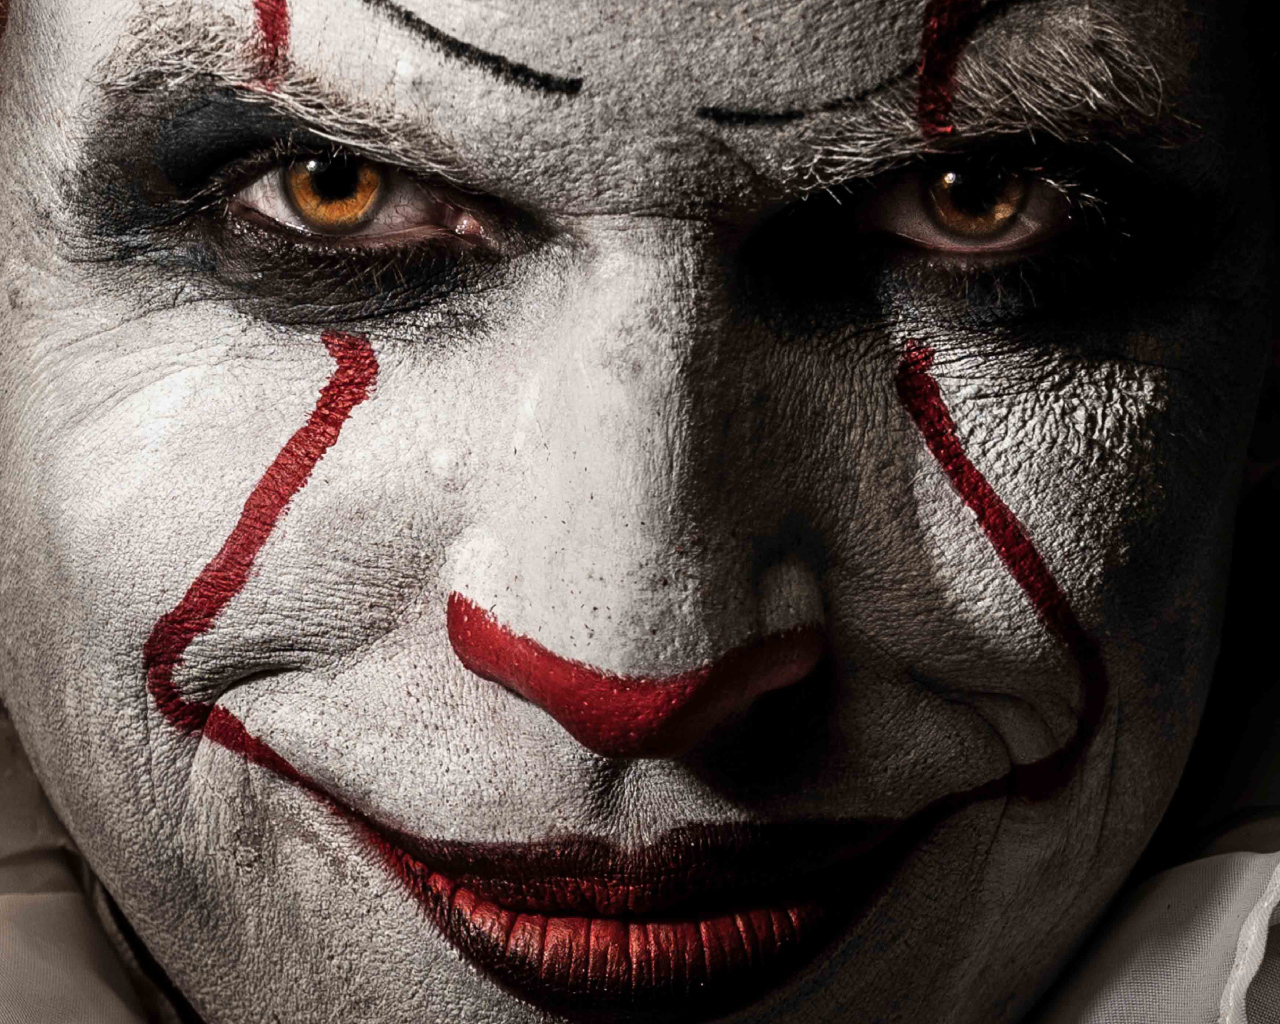 Poster of a new American thriller Joker, 2019